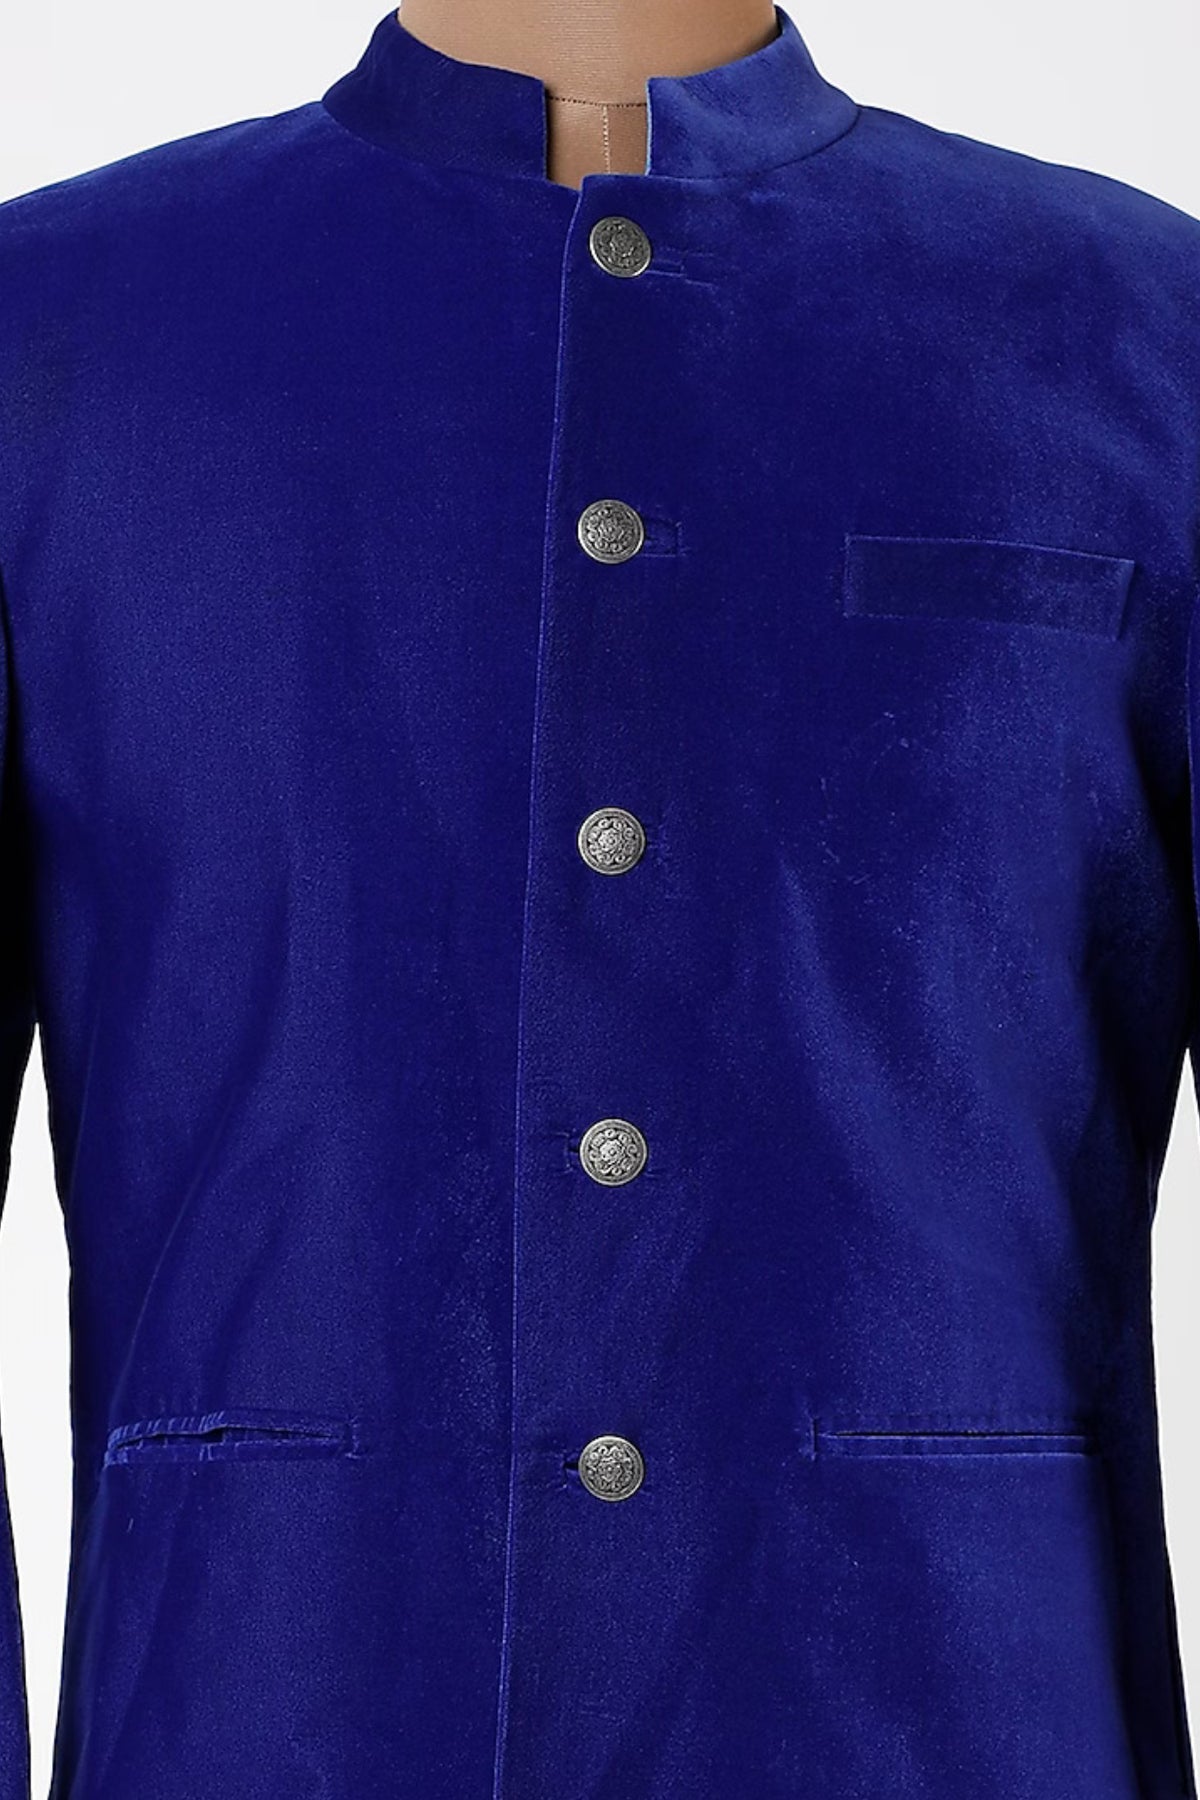 Navy blue Jodhpuri jacket